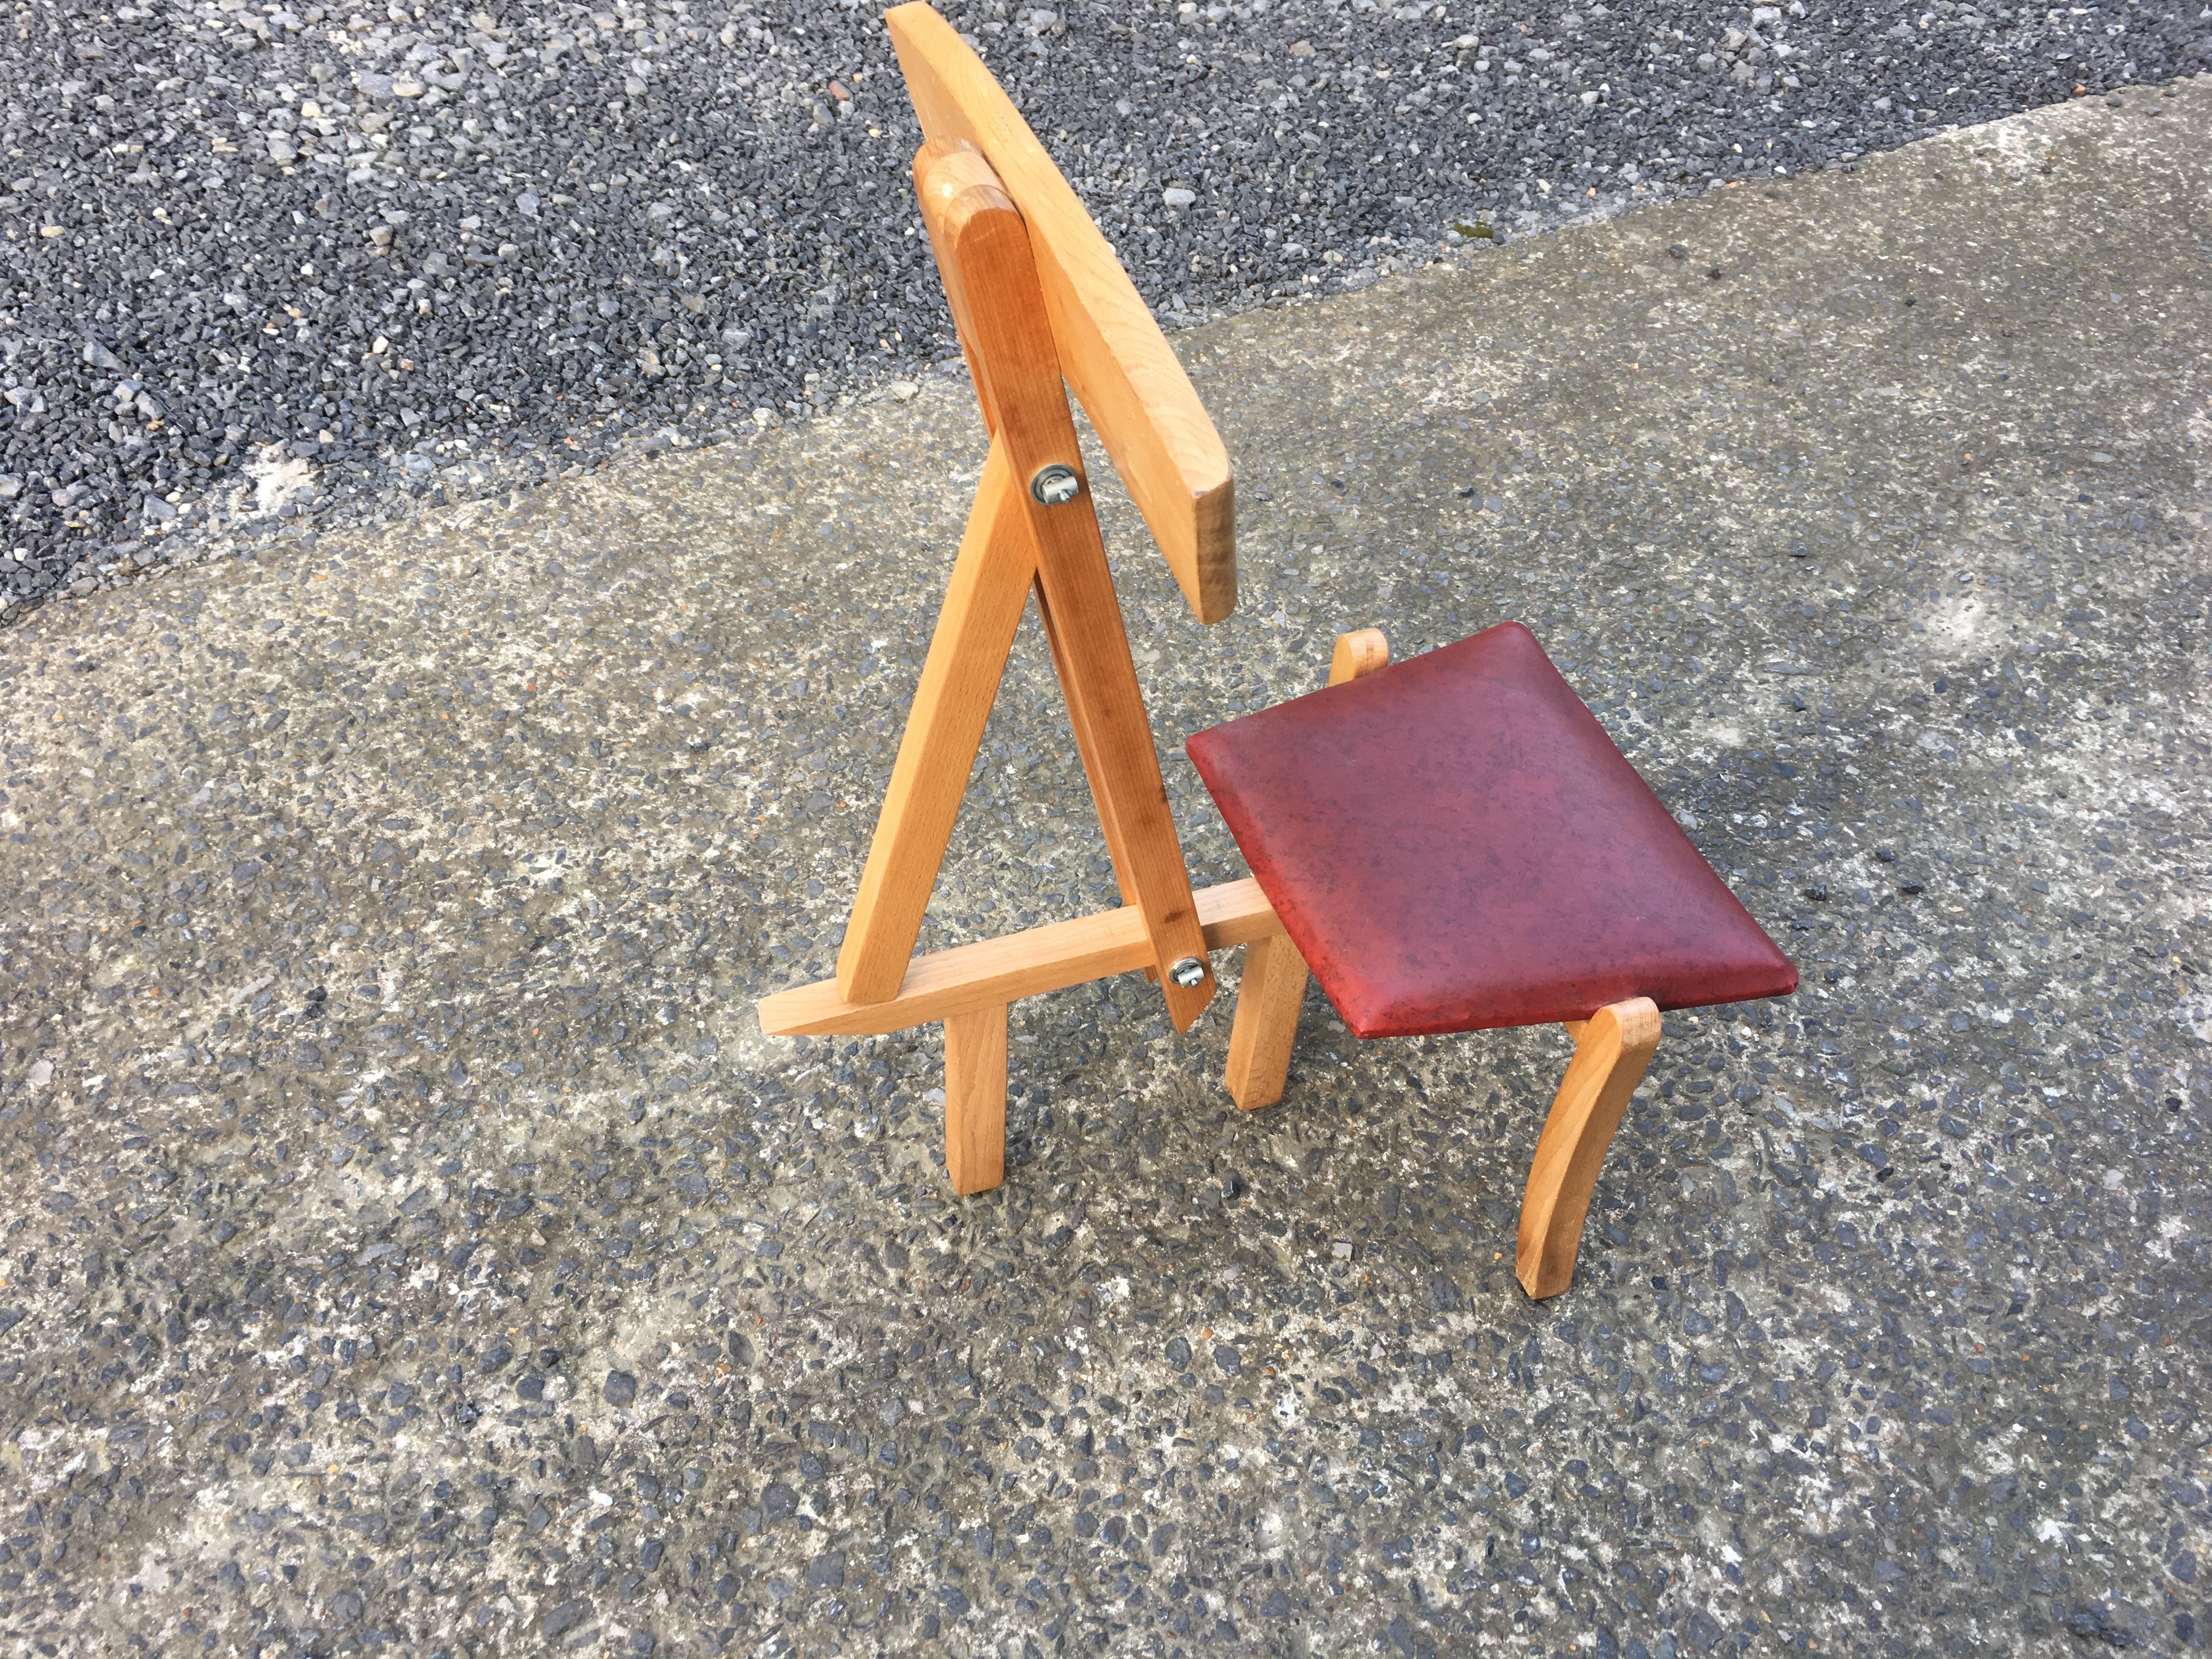 Funny Prototyp-Stuhl mit System, ca. 1970–1980 (Ende des 20. Jahrhunderts) im Angebot